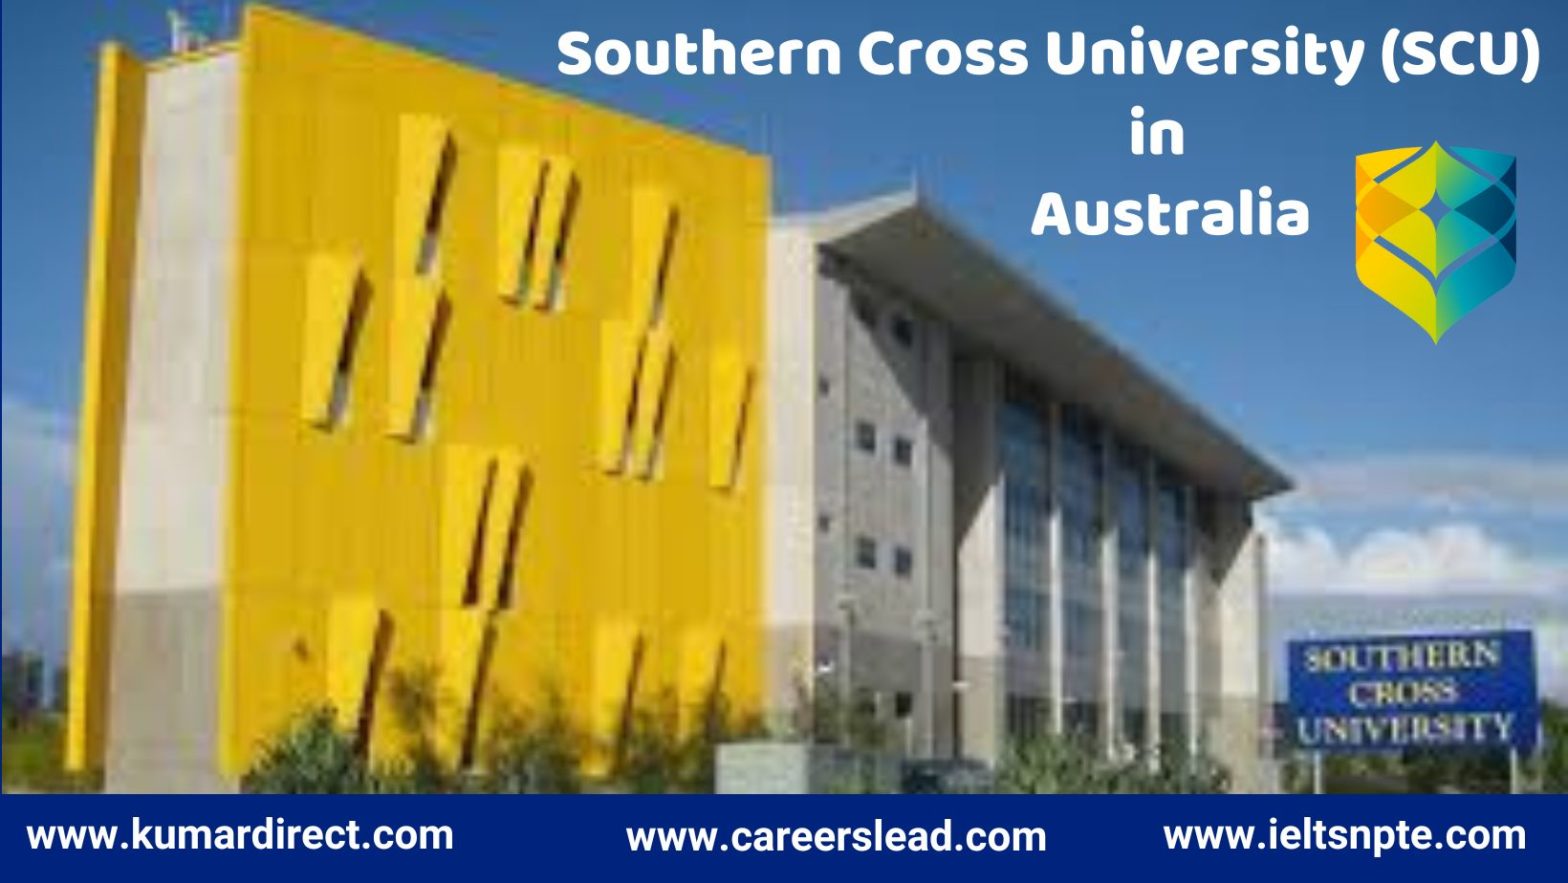 Southern Cross University (SCU) in Australia